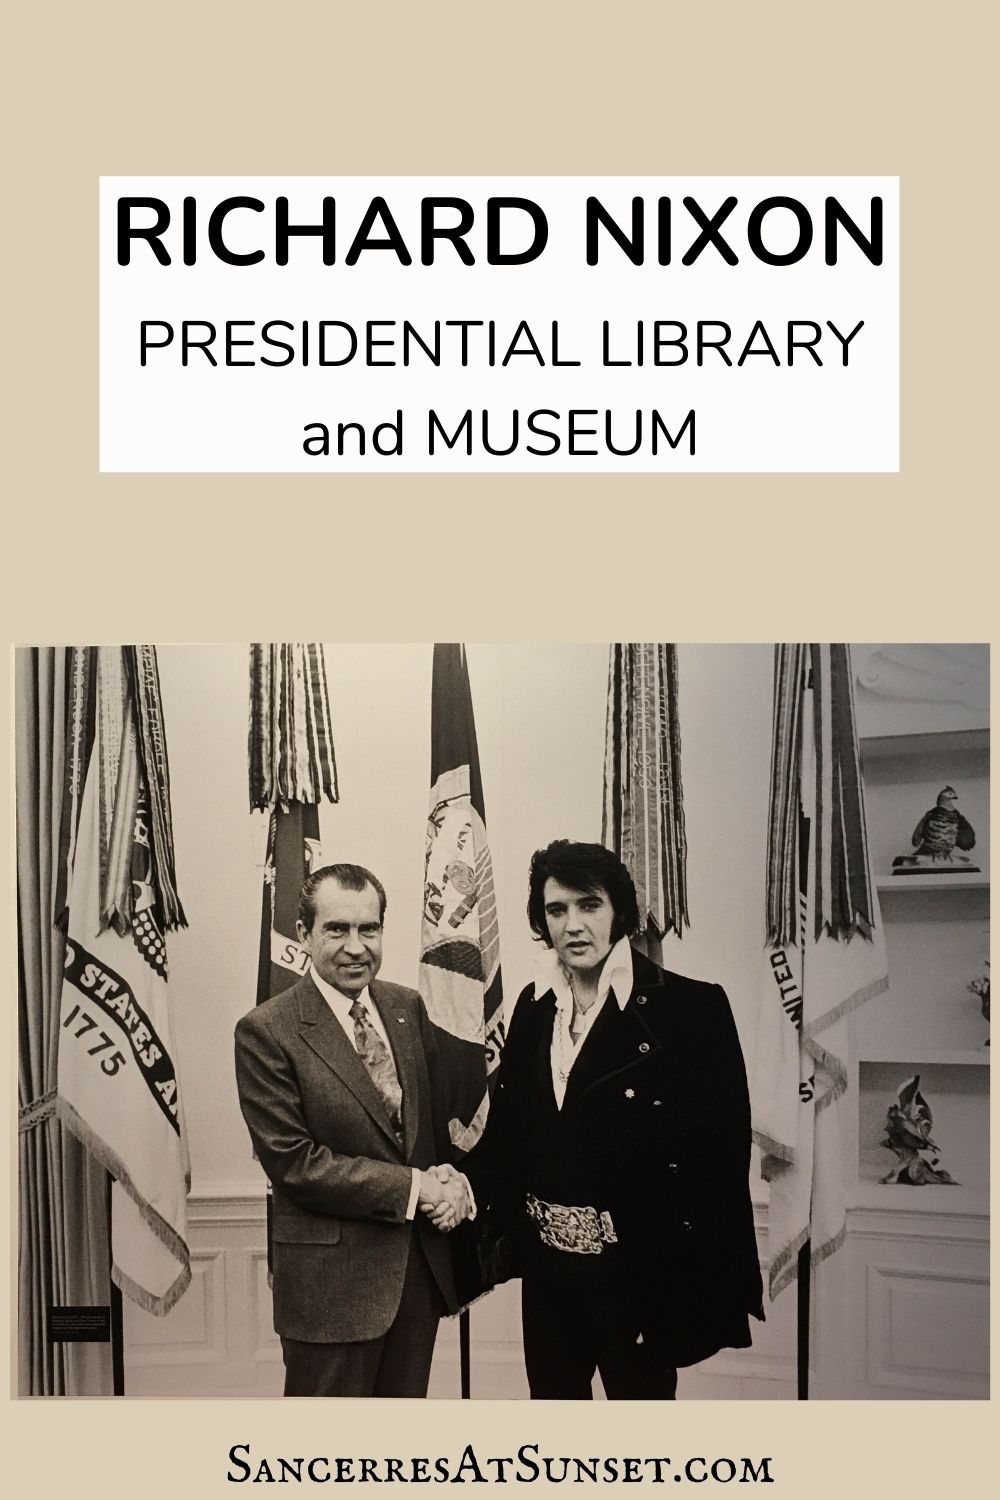 Nixon Library in Yorba Linda, California